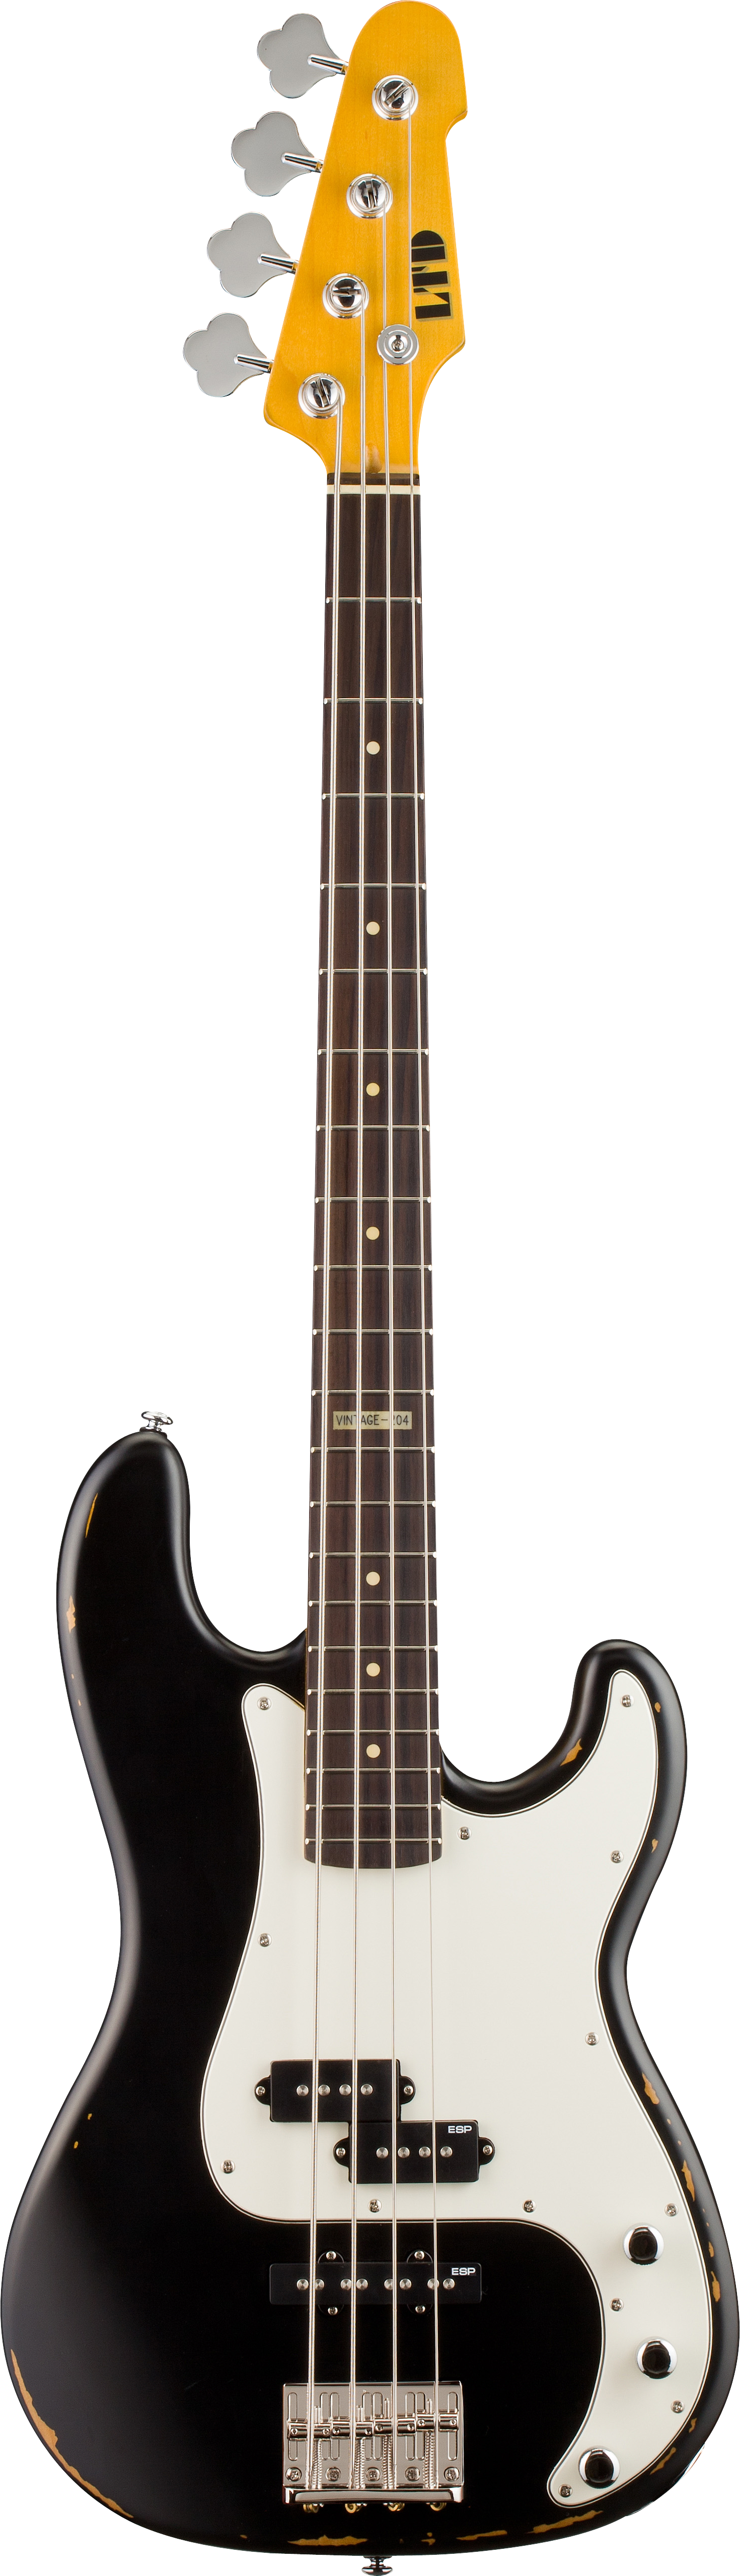 Black Electric Guitar PNG Image